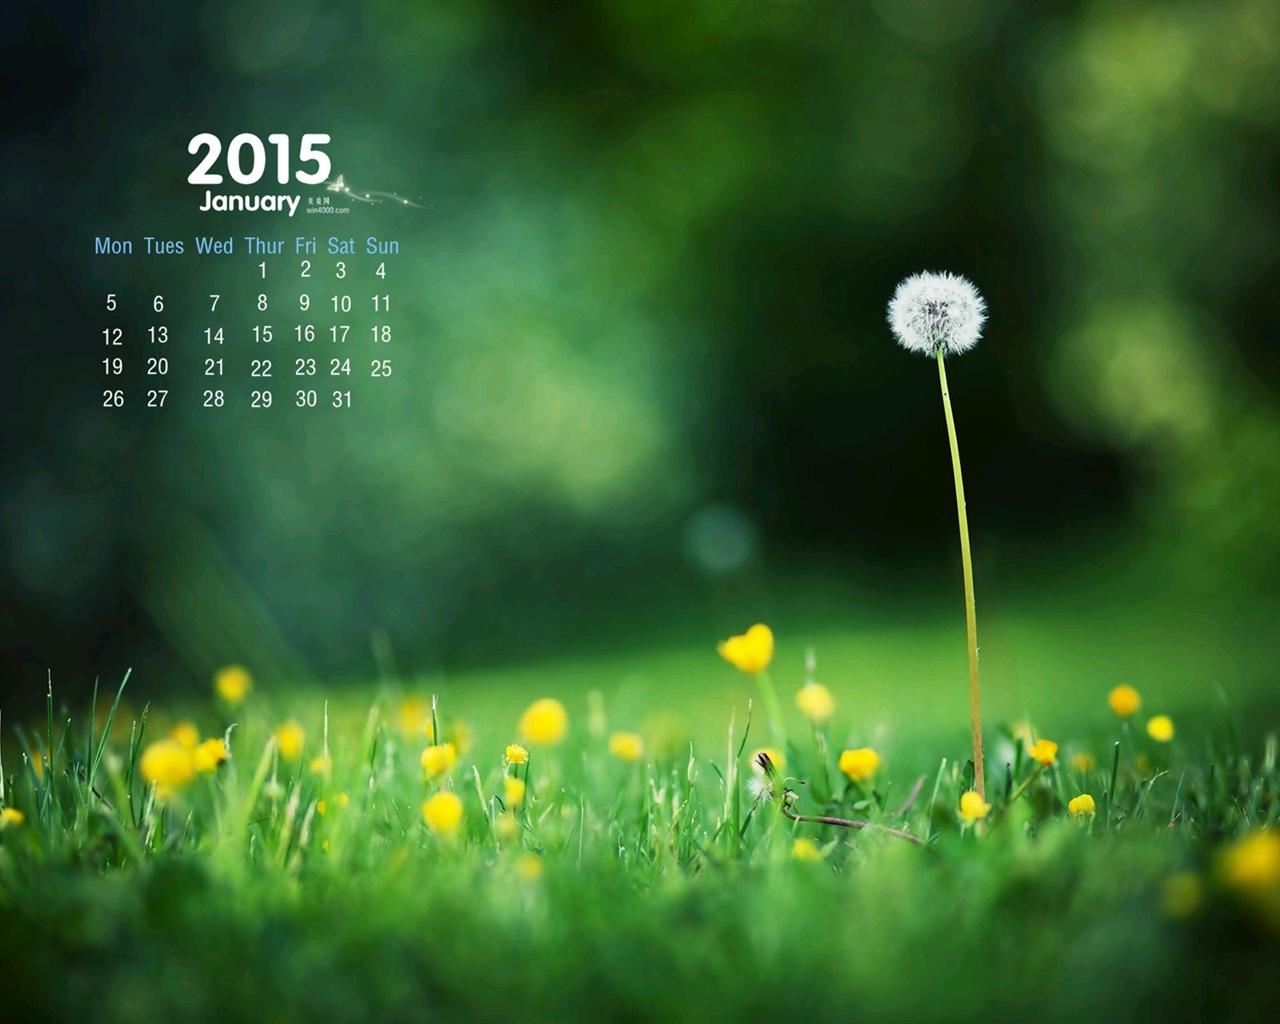 January 2015 calendar wallpaper (1) #15 - 1280x1024